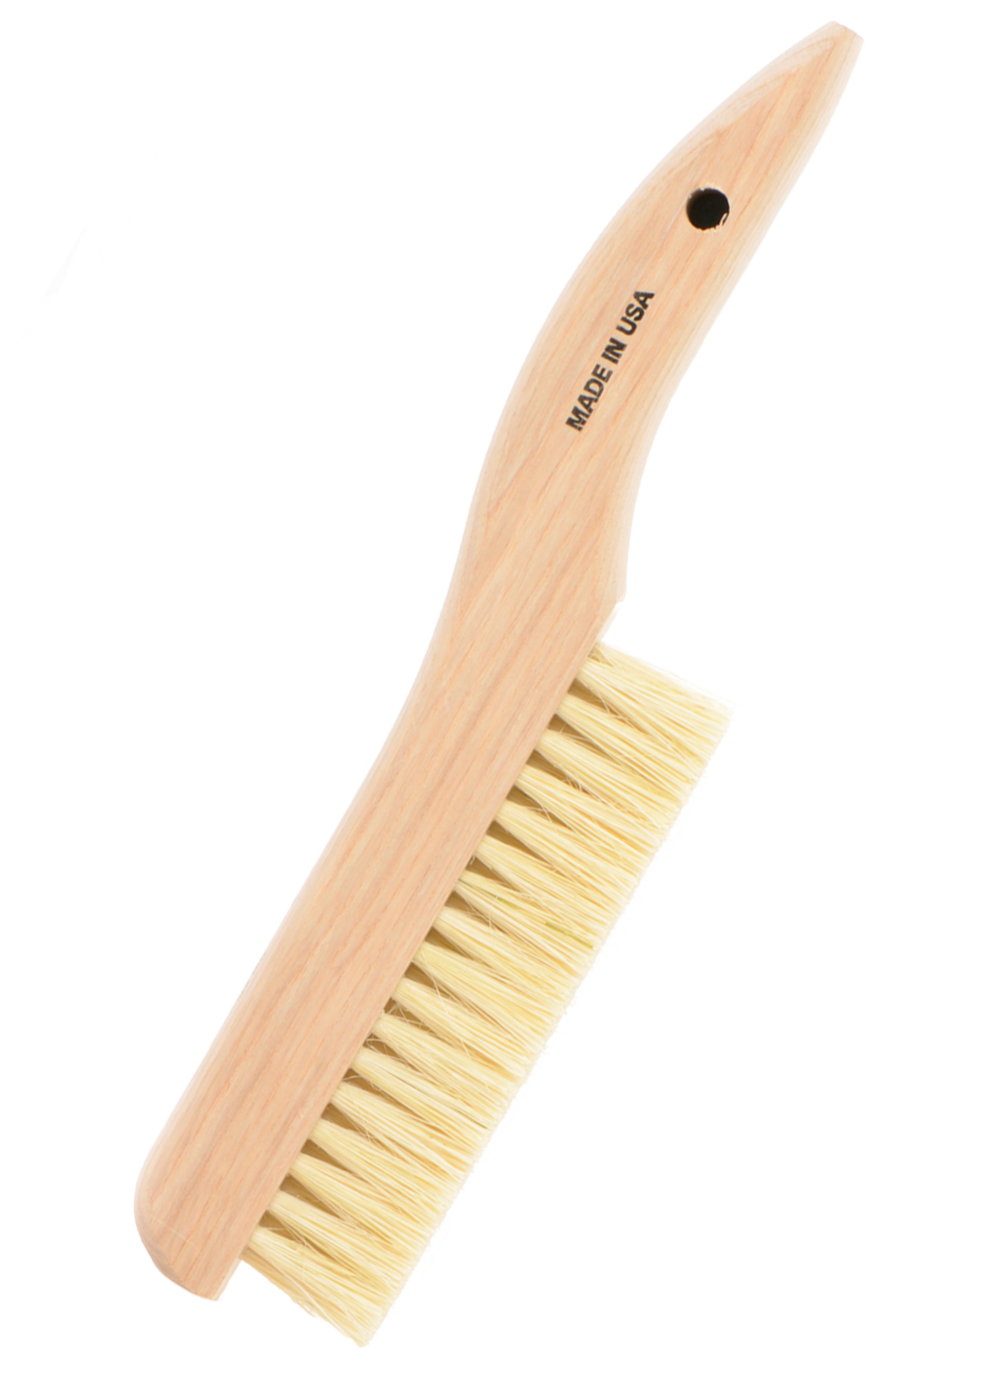 natural bristle scrub brush